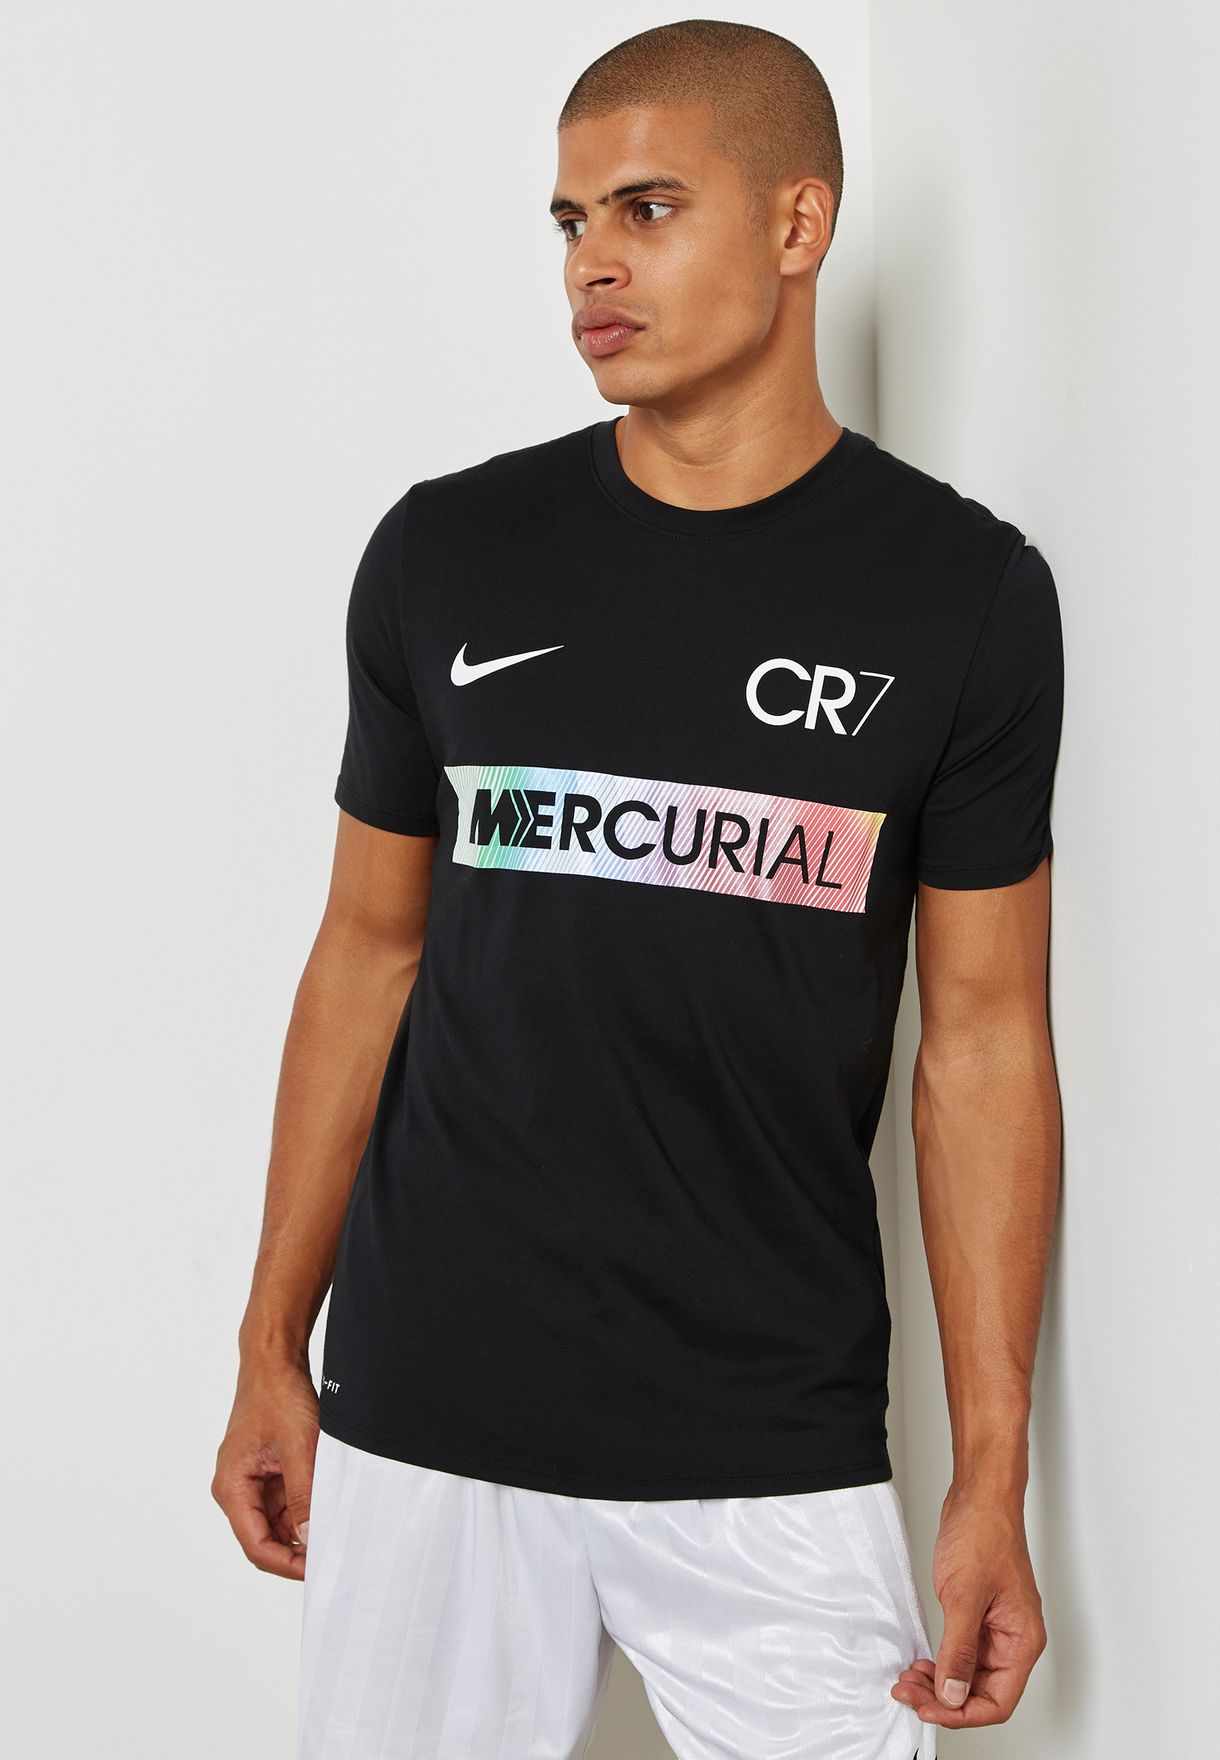 gradualmente he equivocado Comorama Buy Nike black Dri-FIT Ronaldo Mercurial T-Shirt for Men in Dubai, Abu Dhabi